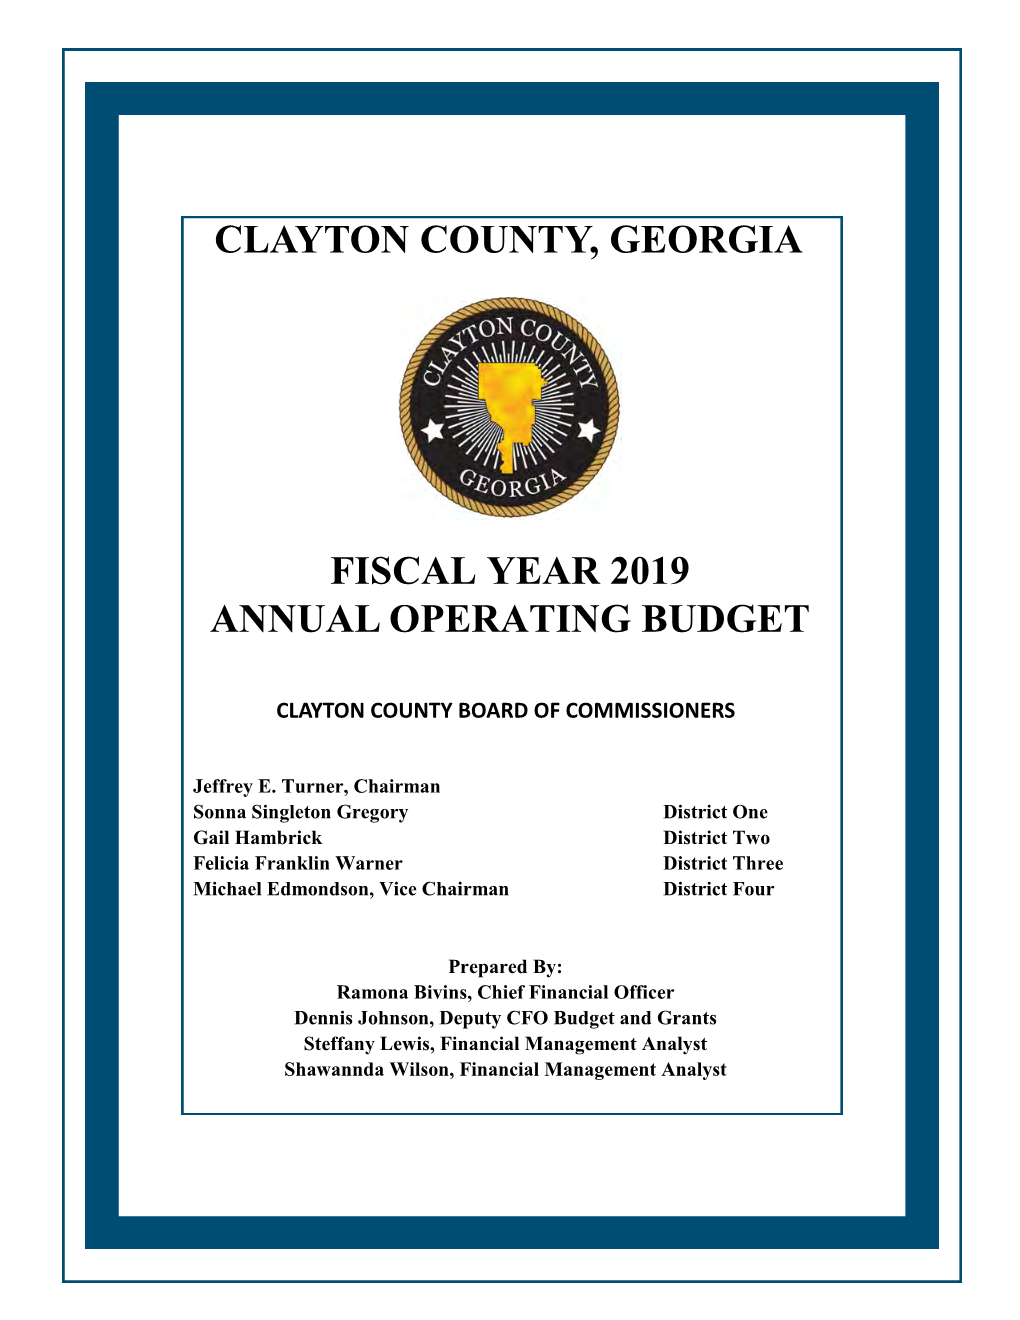 Clayton County, Georgia Fiscal Year 2019 Annual